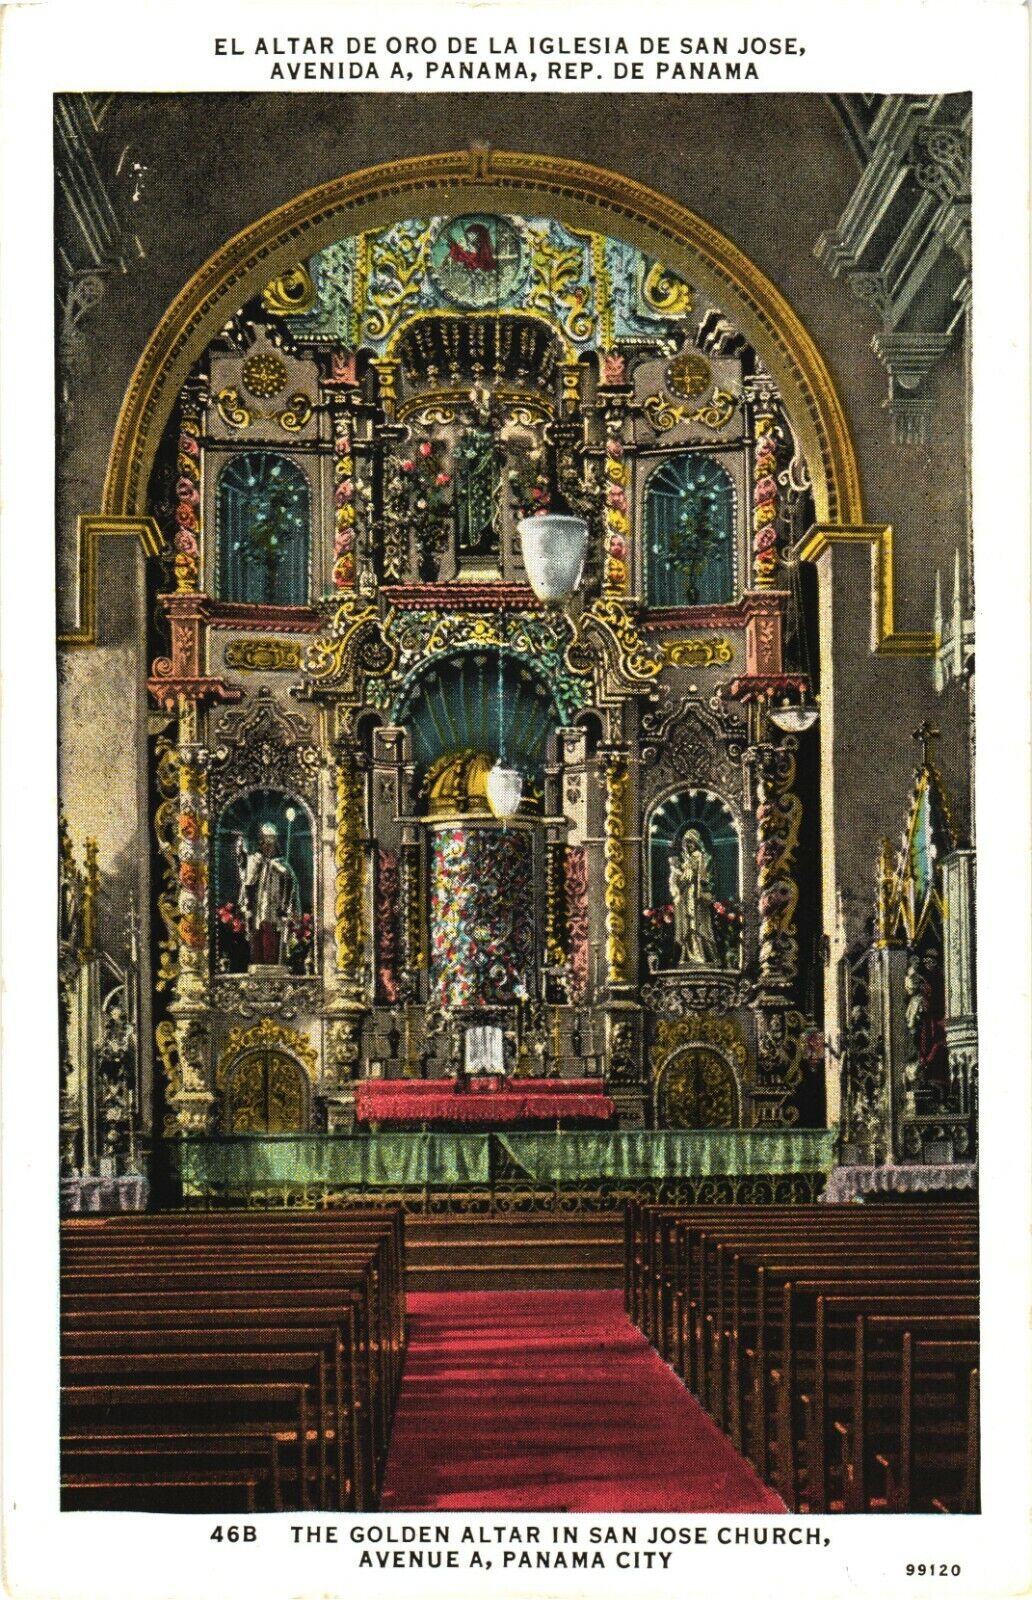 The Golden Altar In San Jose Church Avenue A, Panama City, Panama Postcard